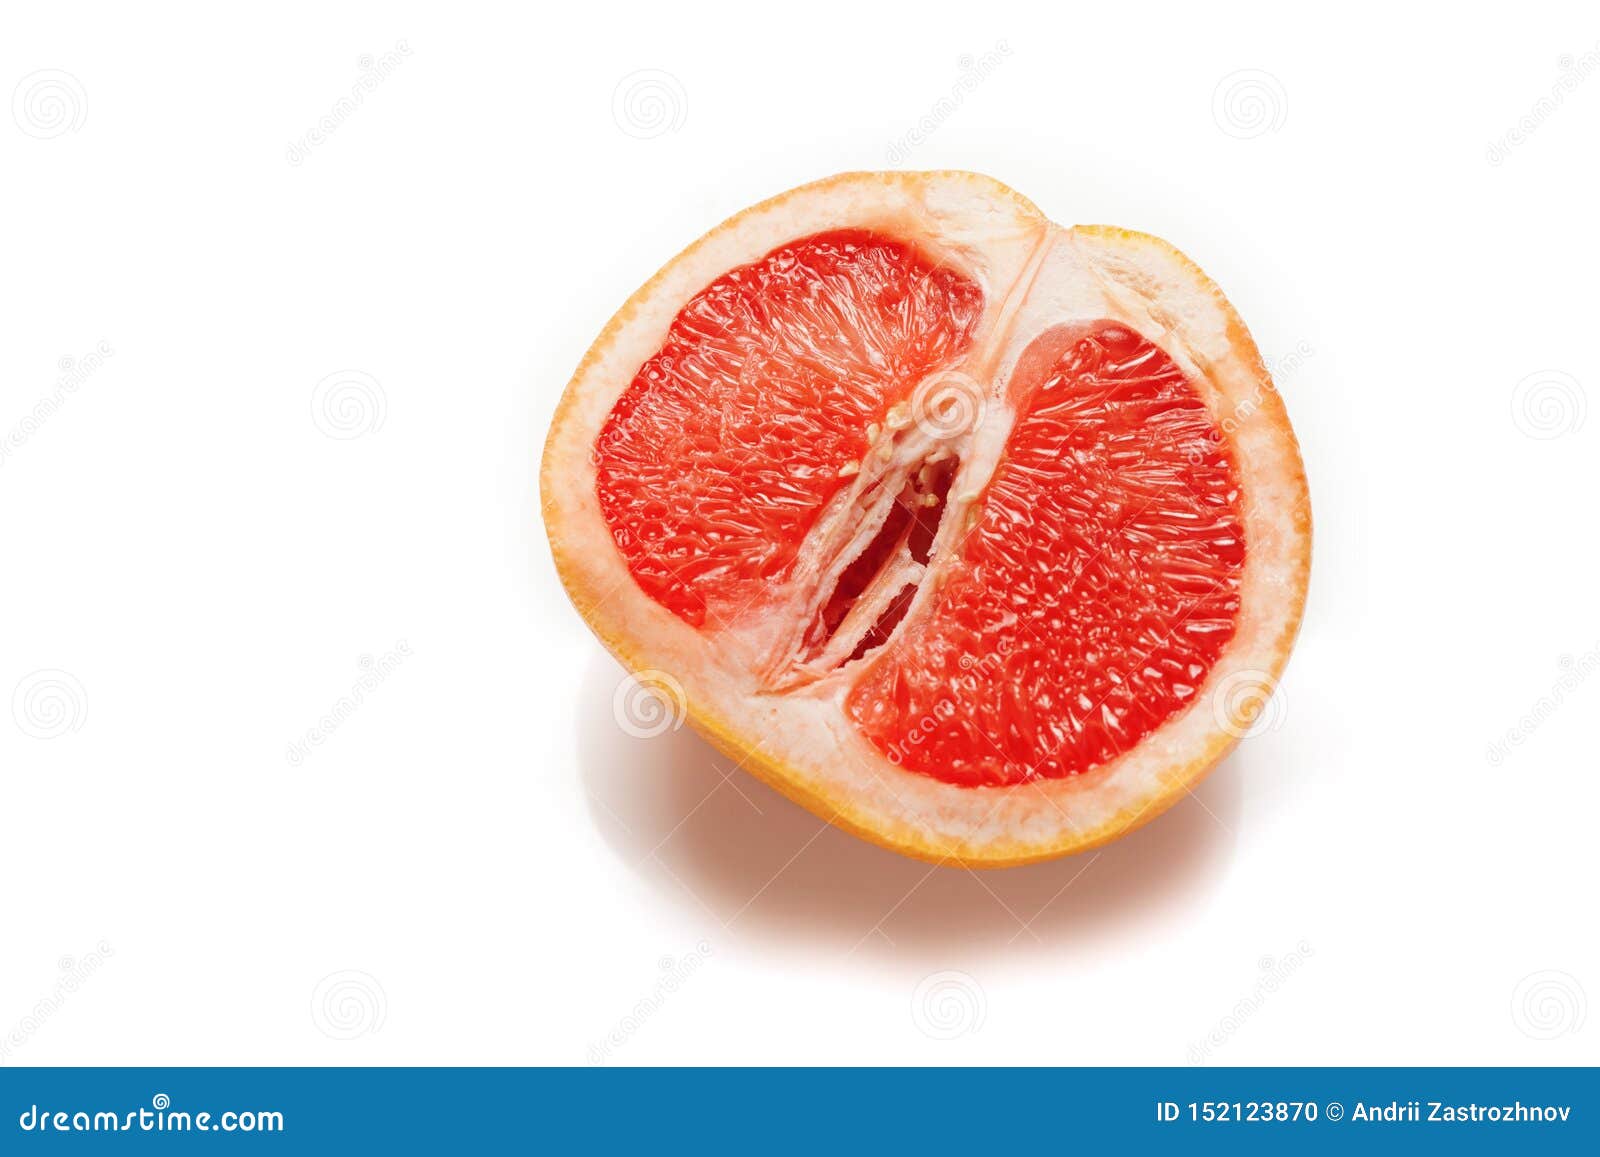 sexual grapefruit, concept. vagina and clitoris 